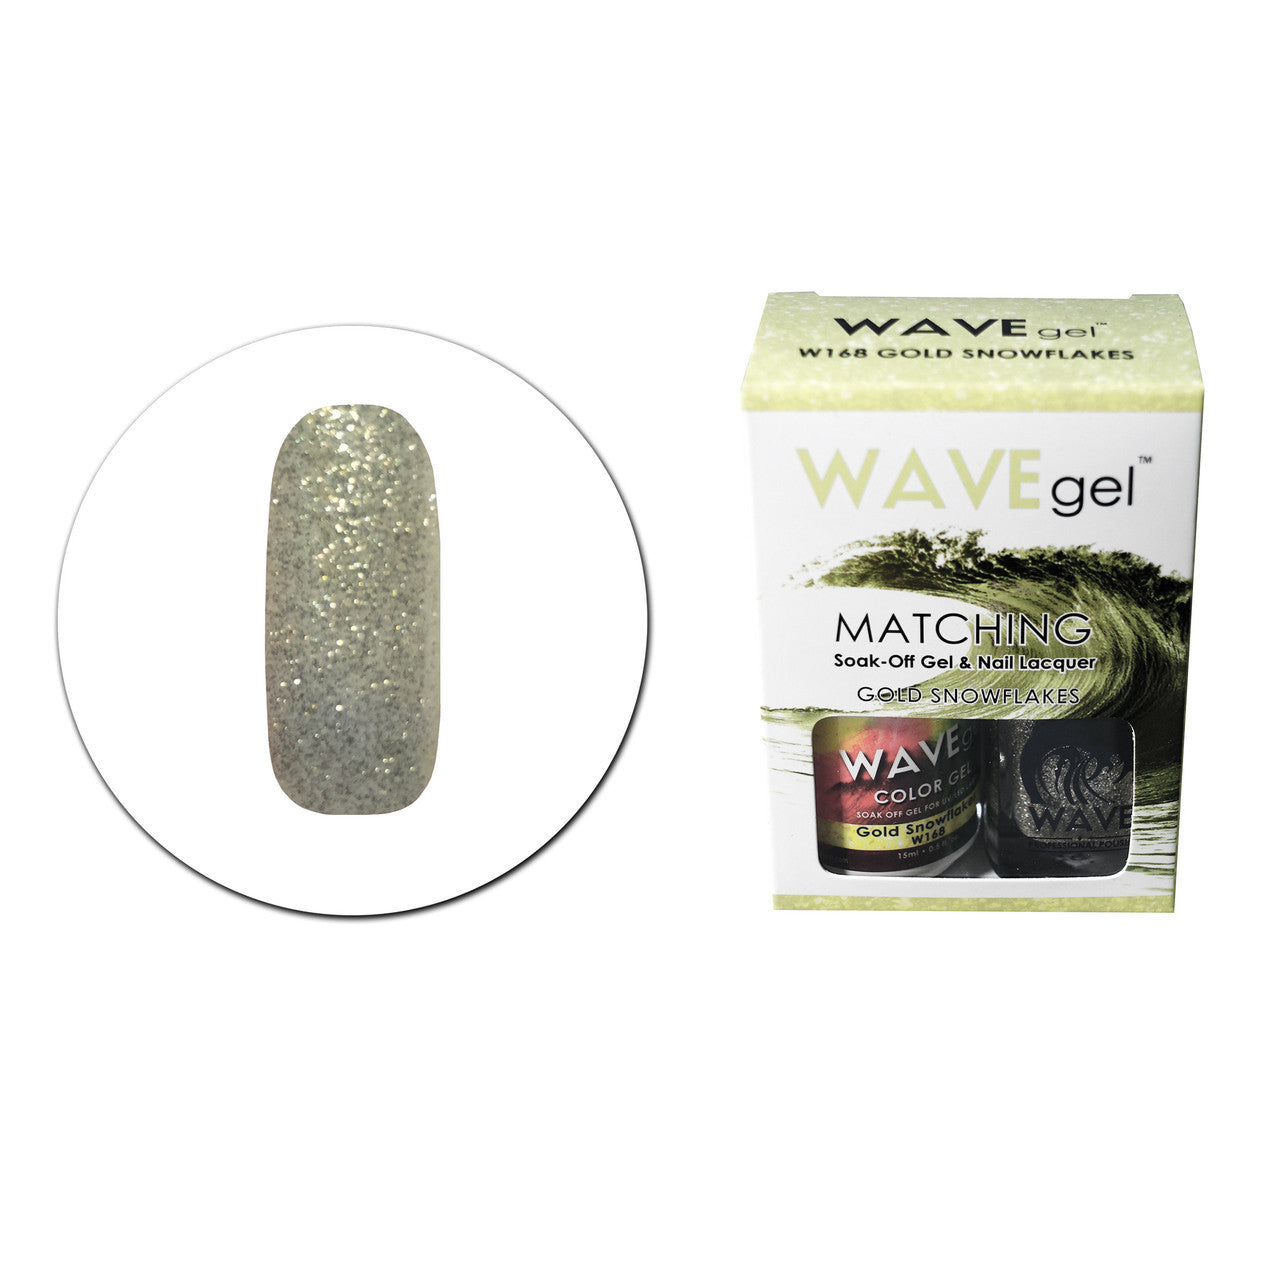 Matching -Gold Snowflakes W168 Diamond Nail Supplies